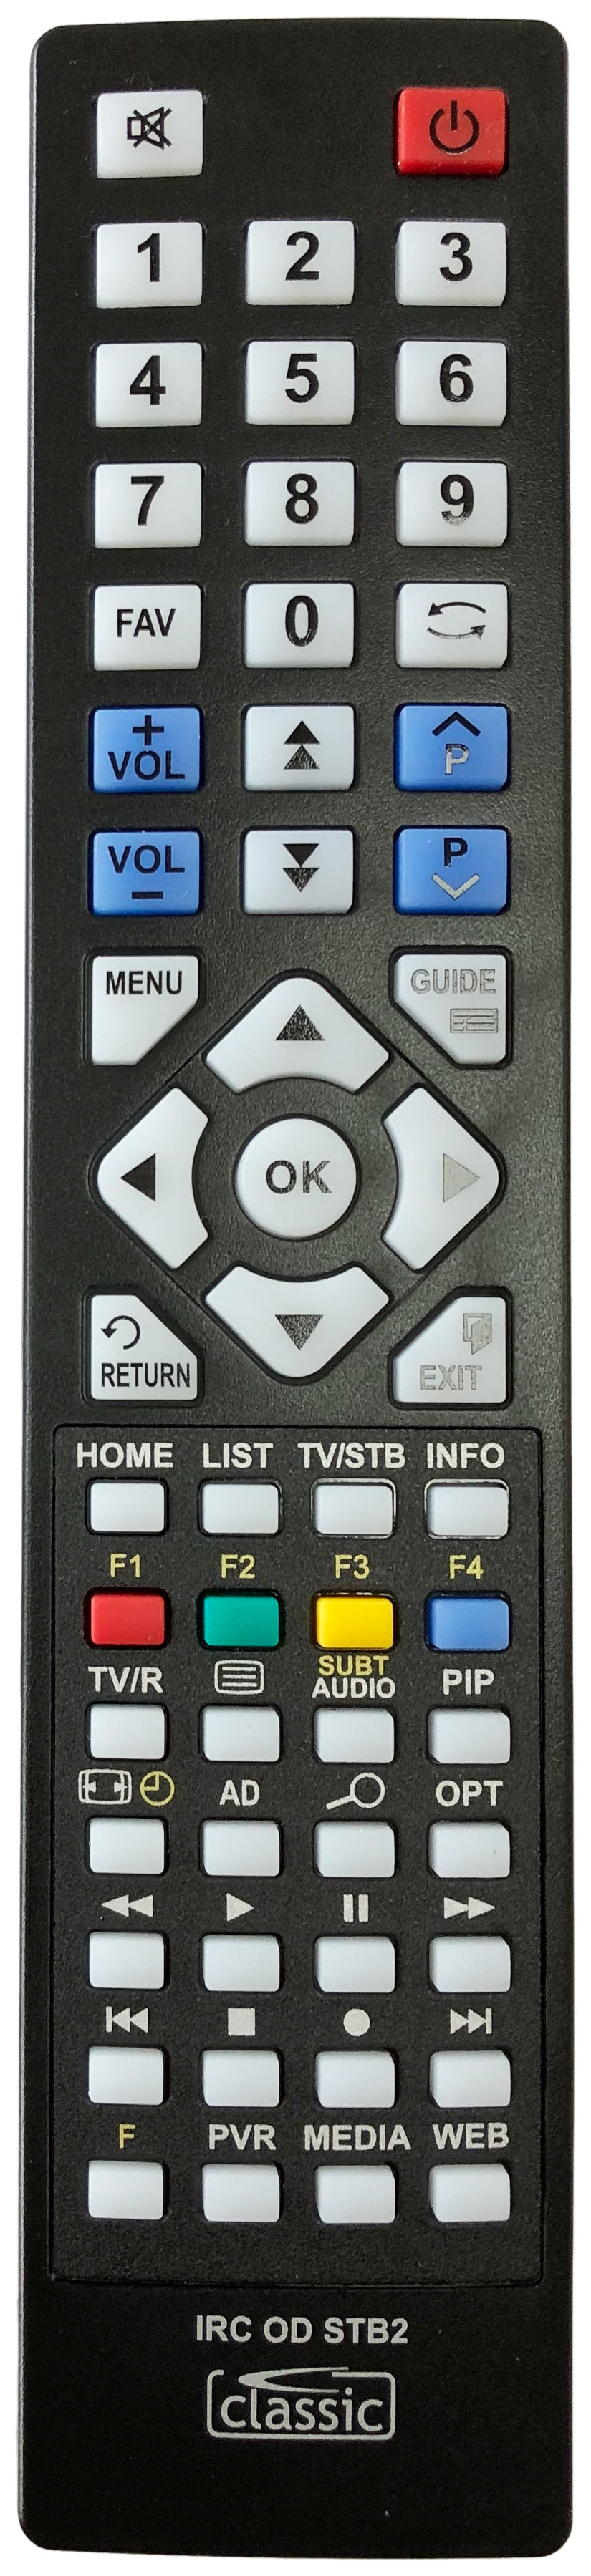 HUMAX RM-I08U Remote Control Alternative